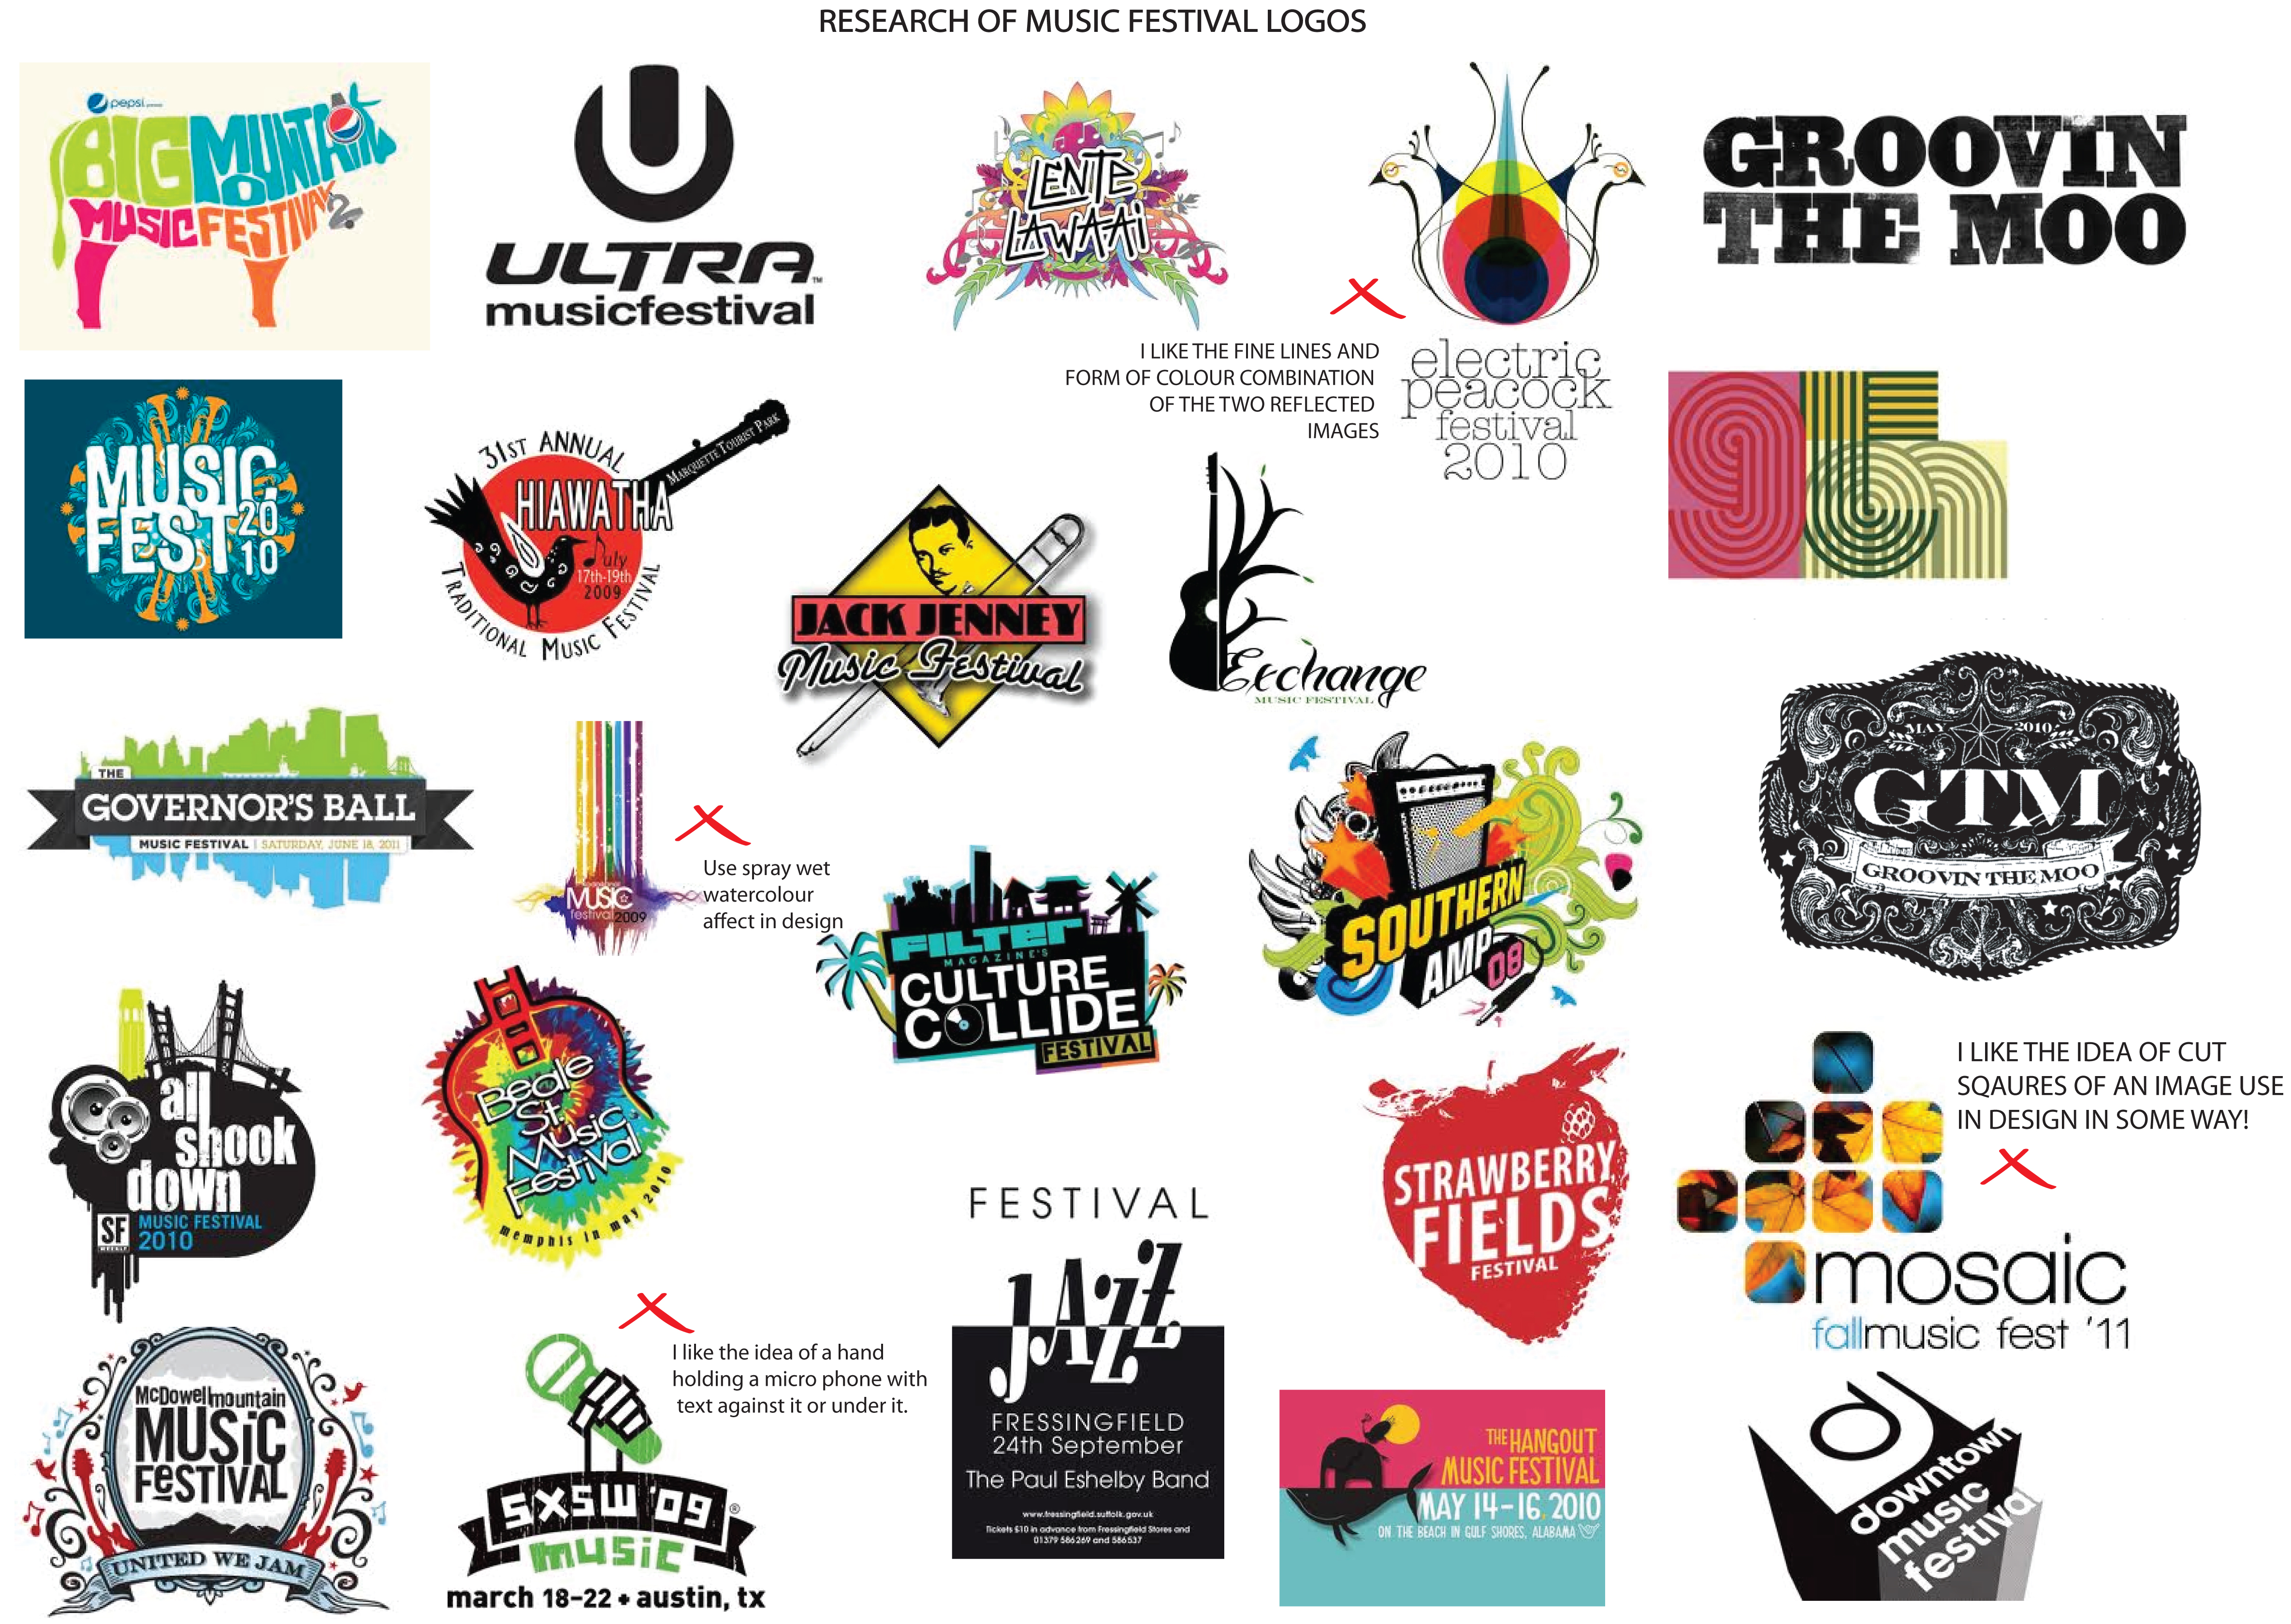 research music festival logos.